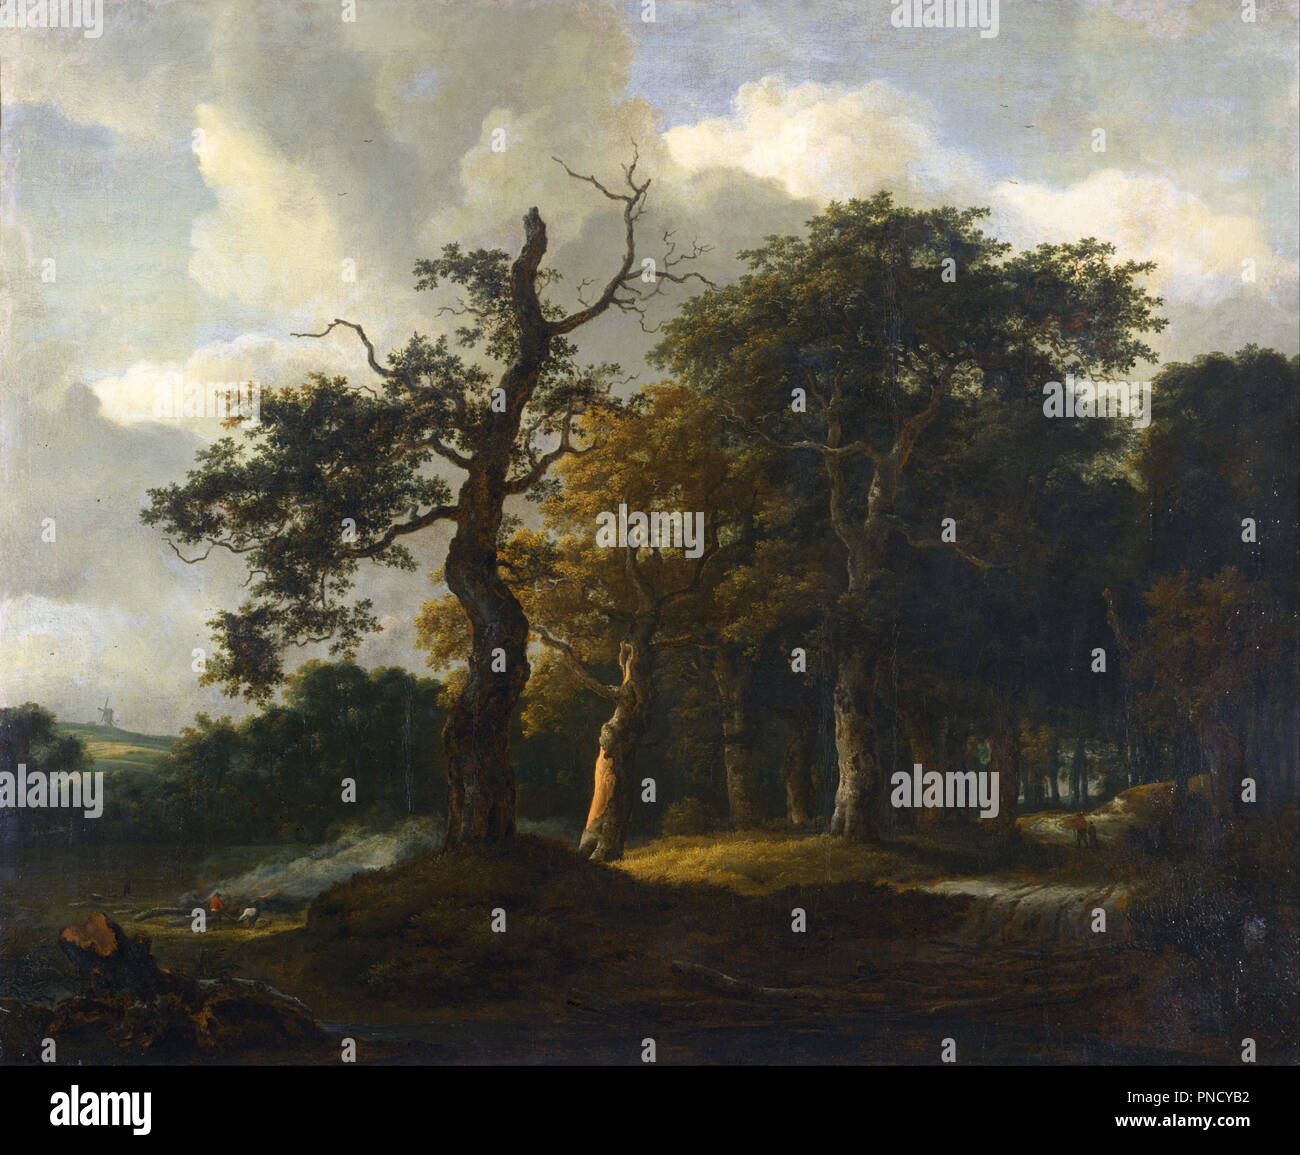 A Road through an Oak Wood. Painting. Oil on canvas. Height: 1,025 mm (40.35 in); Width: 1,270 mm (50 in). Author: Jacob van Ruisdael. Ruisdael, Jacob Isaacksz, van. Stock Photo